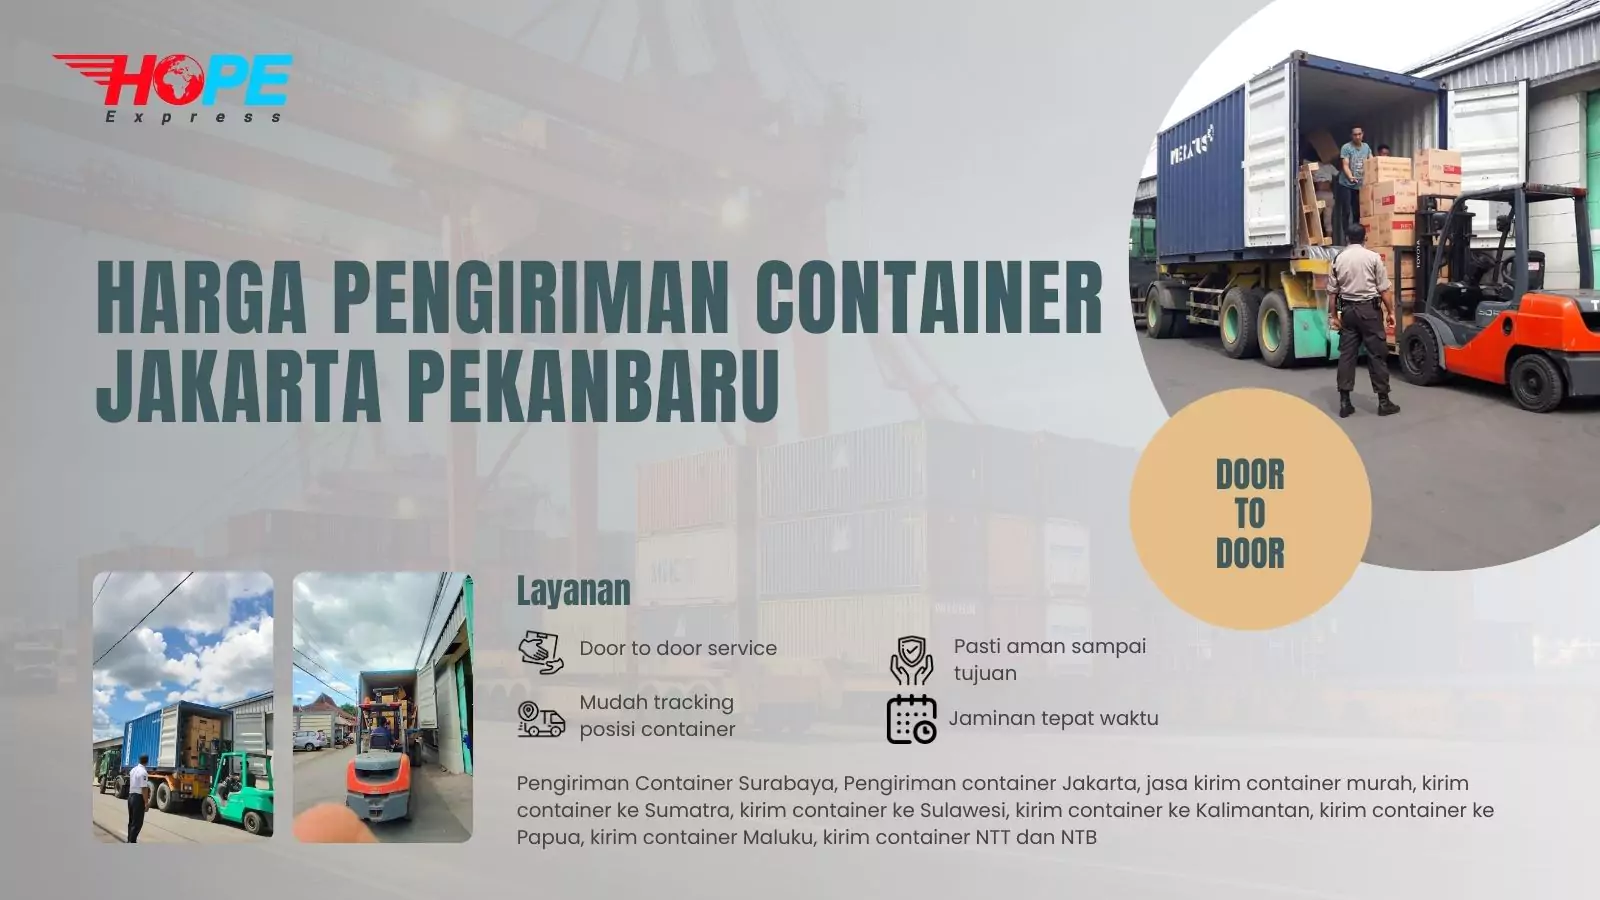 Harga Pengiriman Container Jakarta Pekanbaru